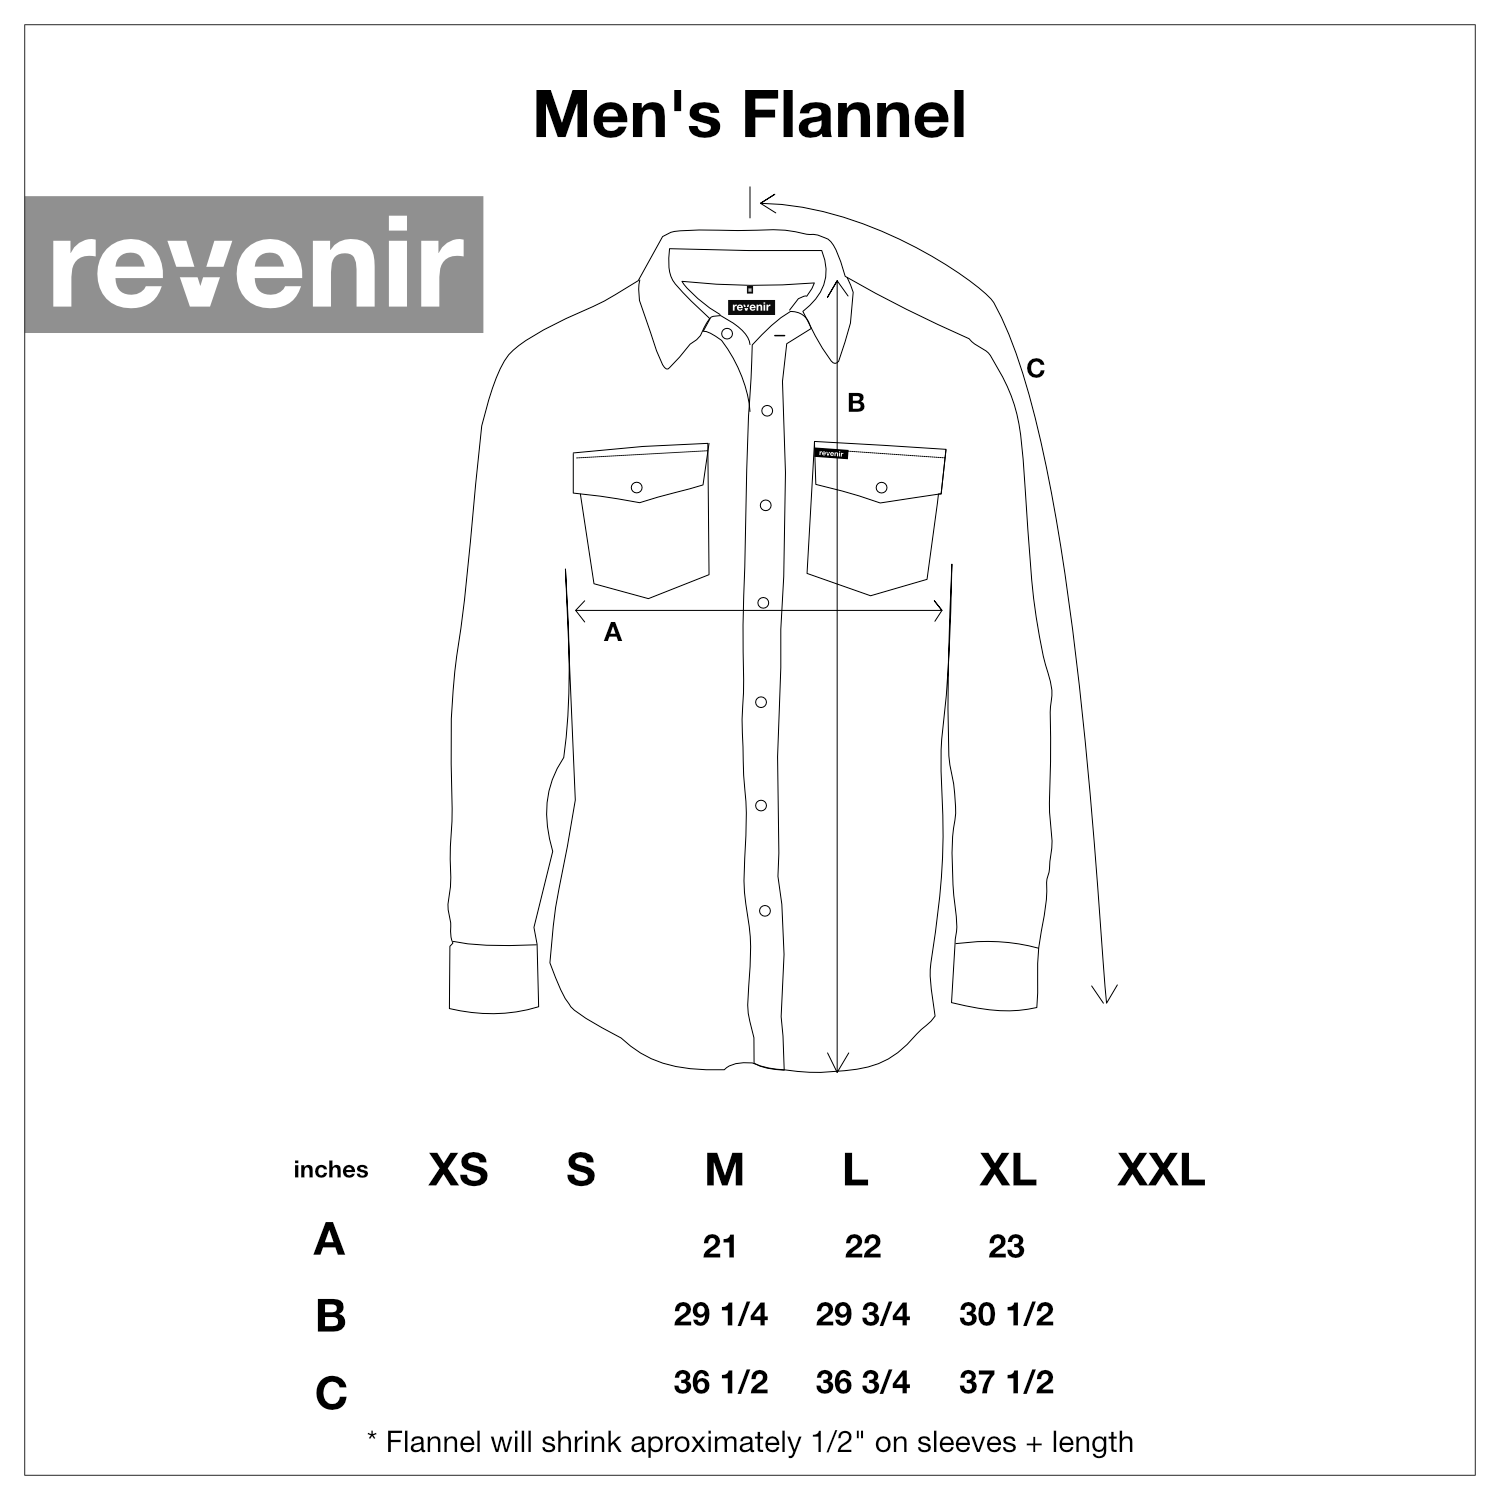 Men's Flannel Size Guide